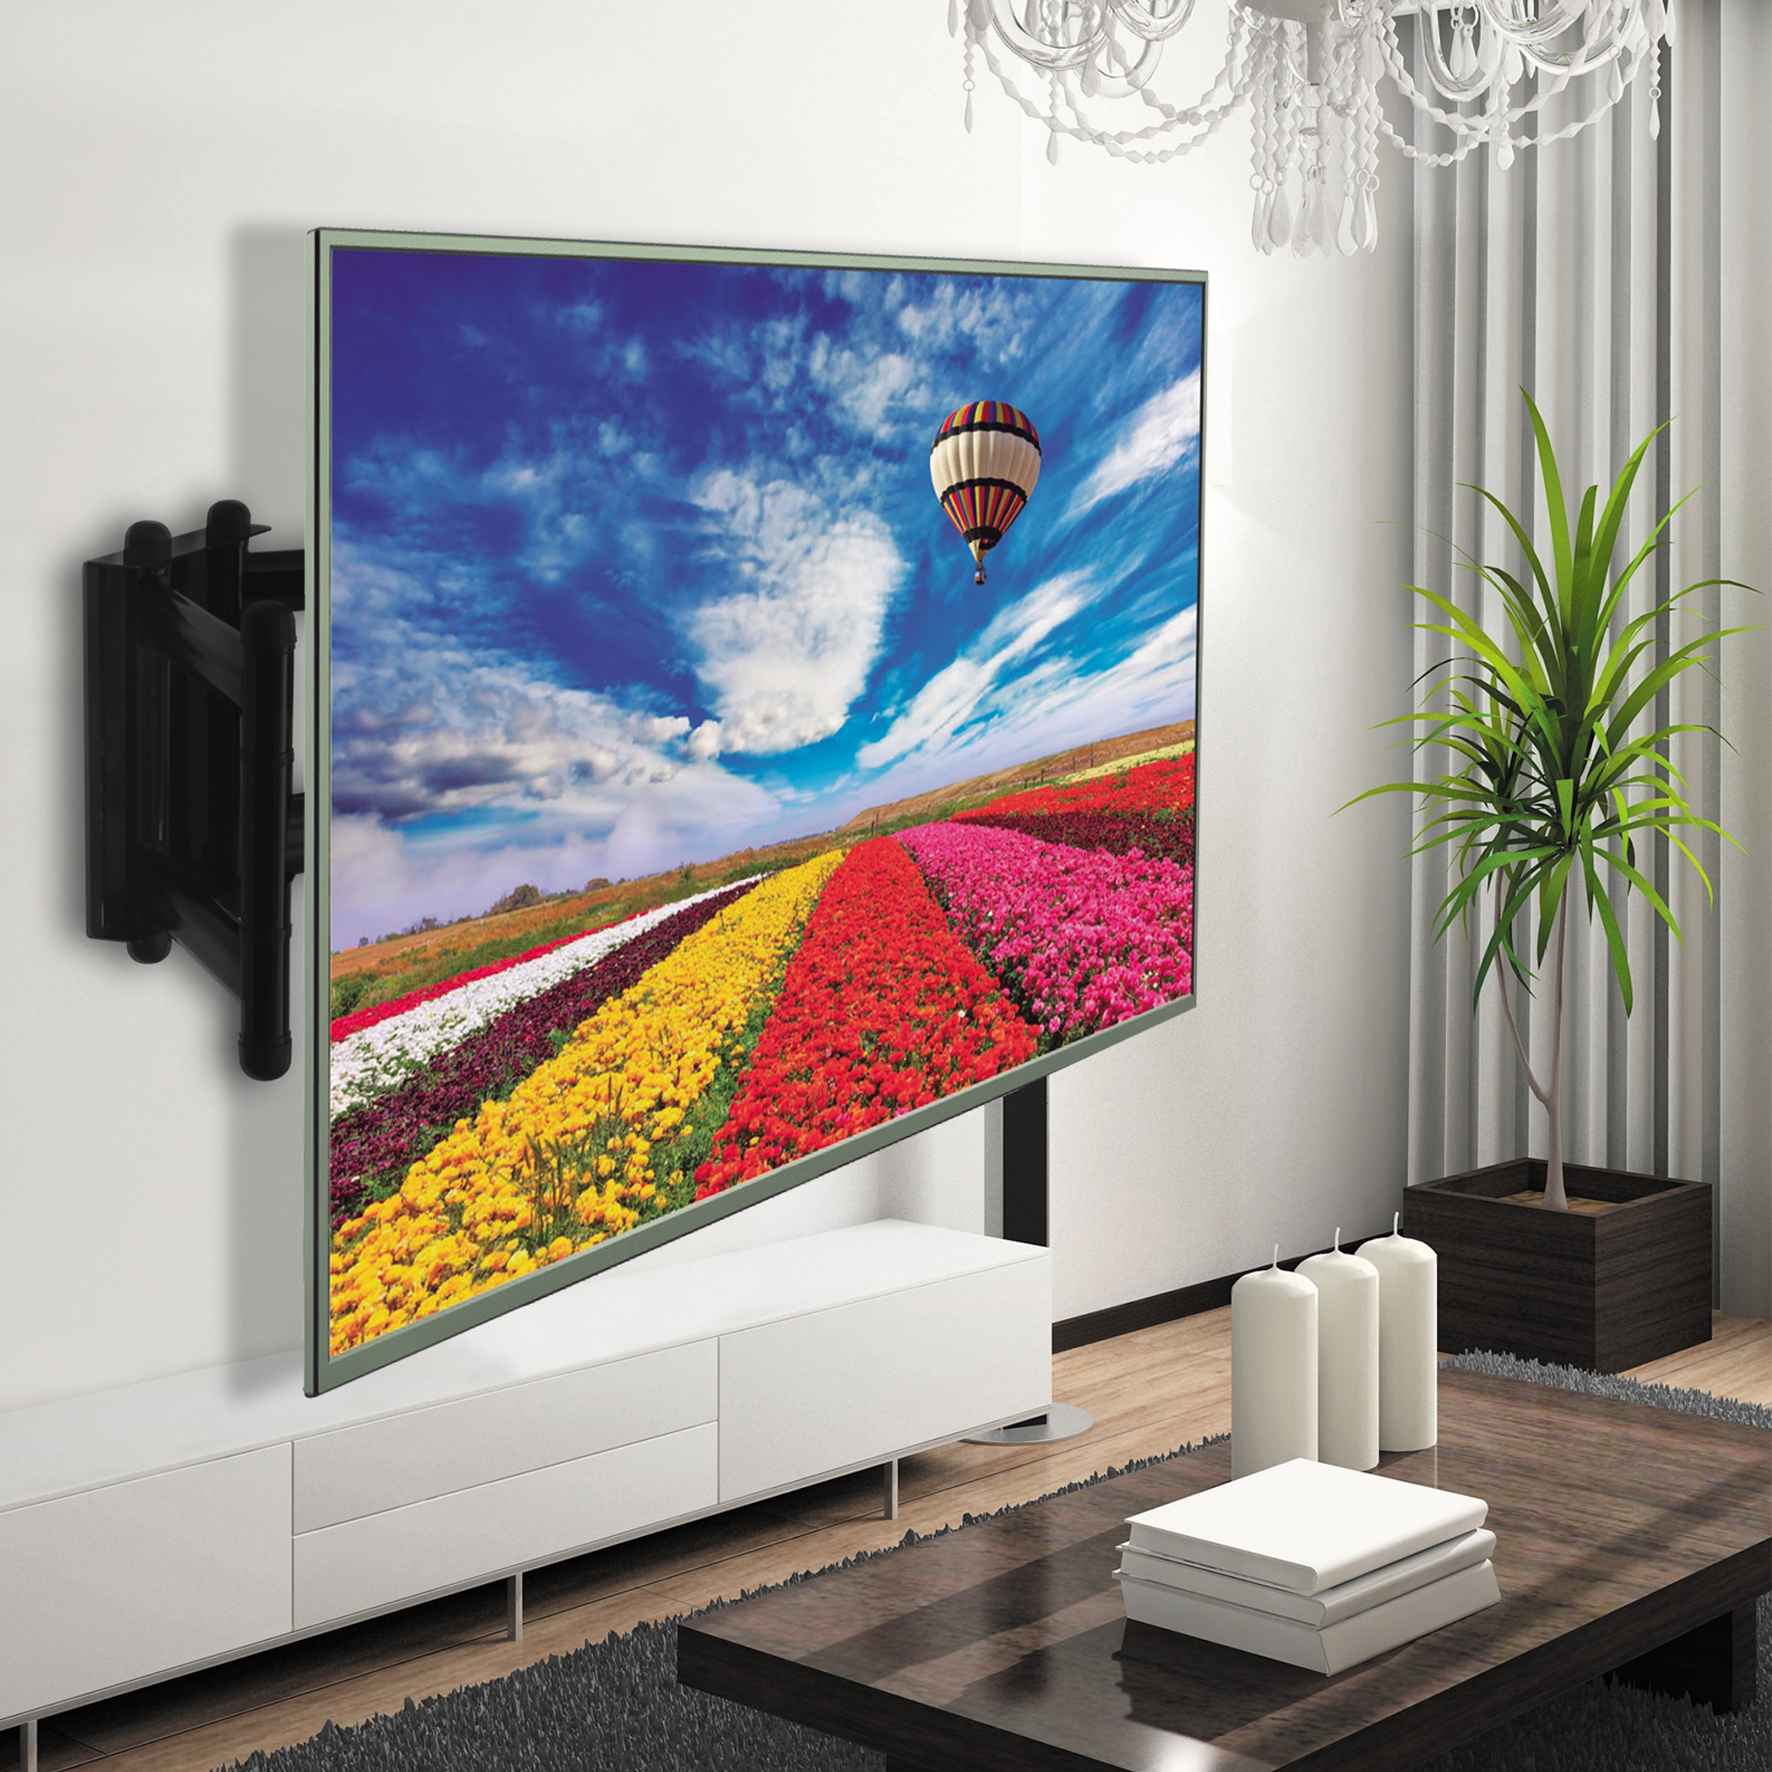 Soporte móvil de pared para televisores con pantallas de 42 a 80 pulgadas,  con extensión de 32 pulgadas de largo